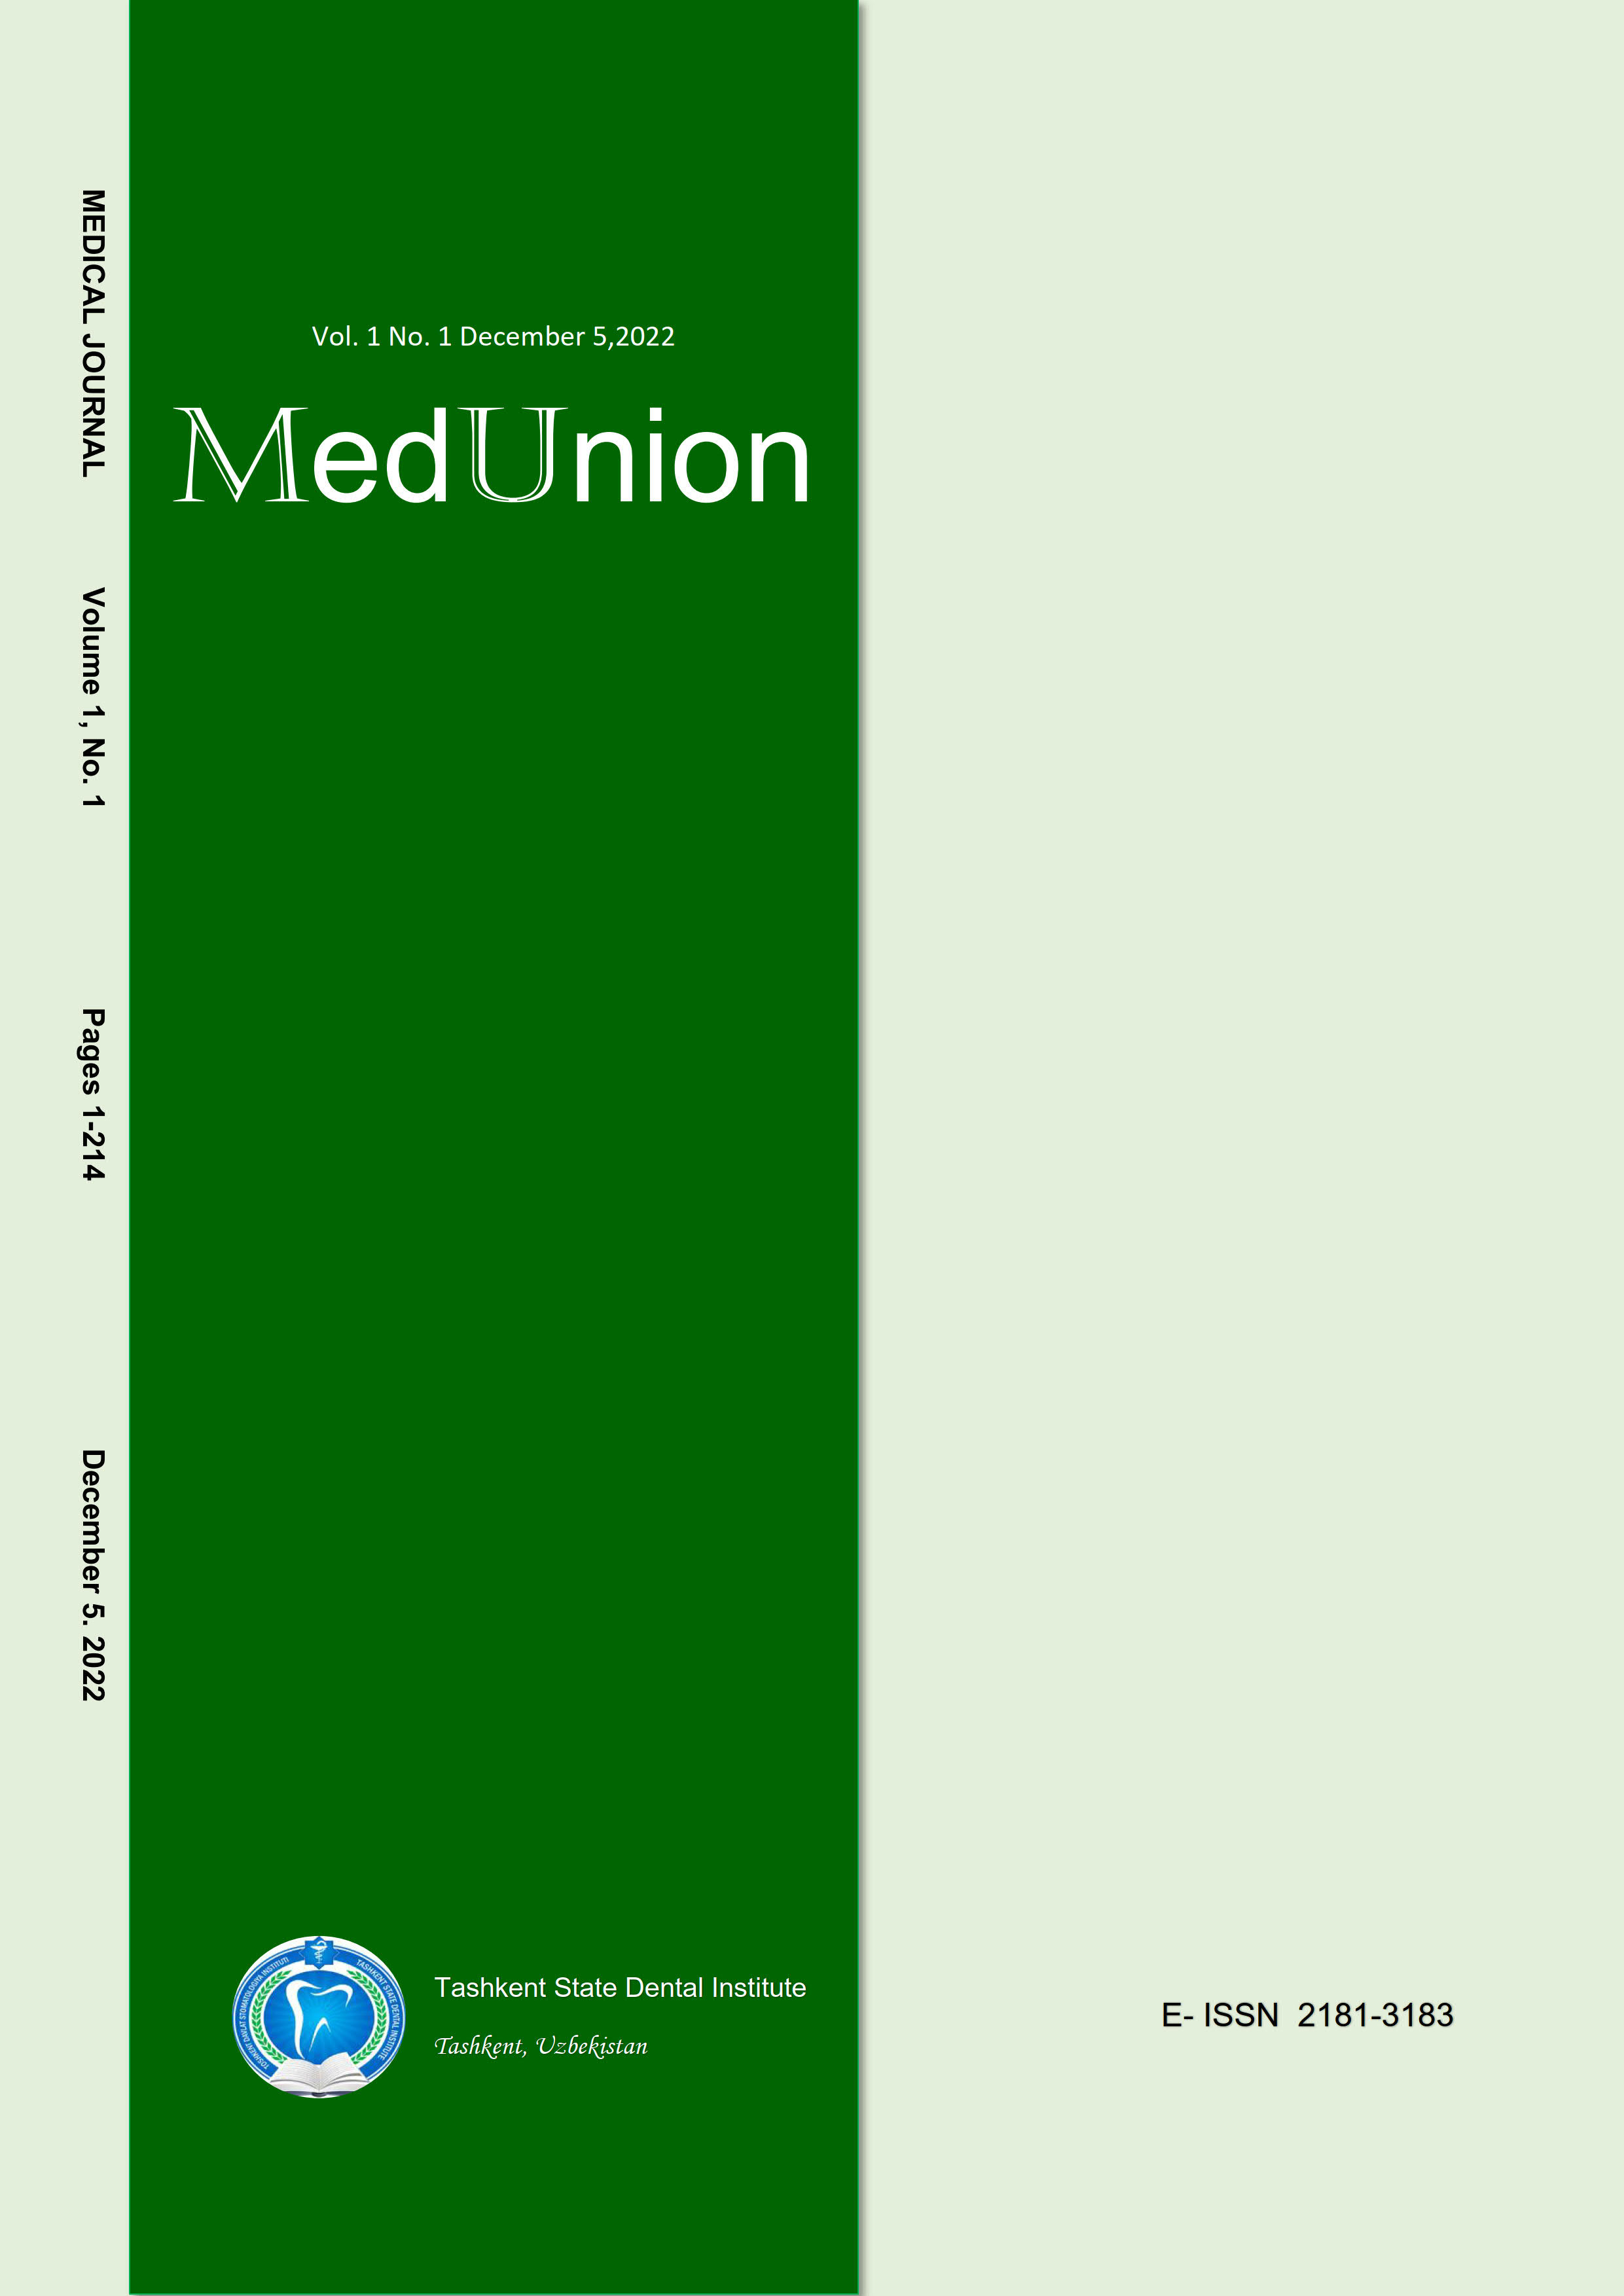 MedUnion